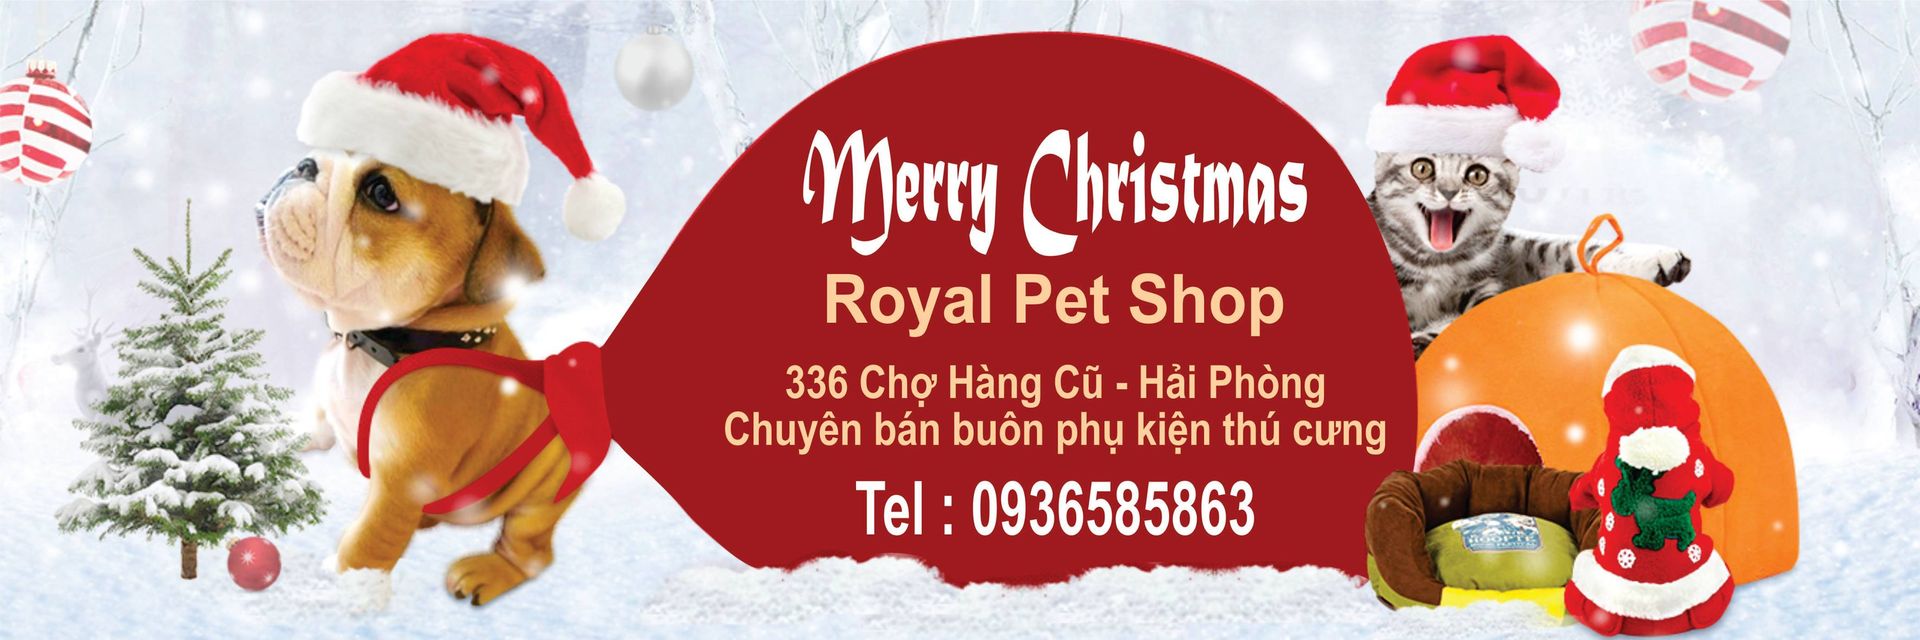 royal pet shop